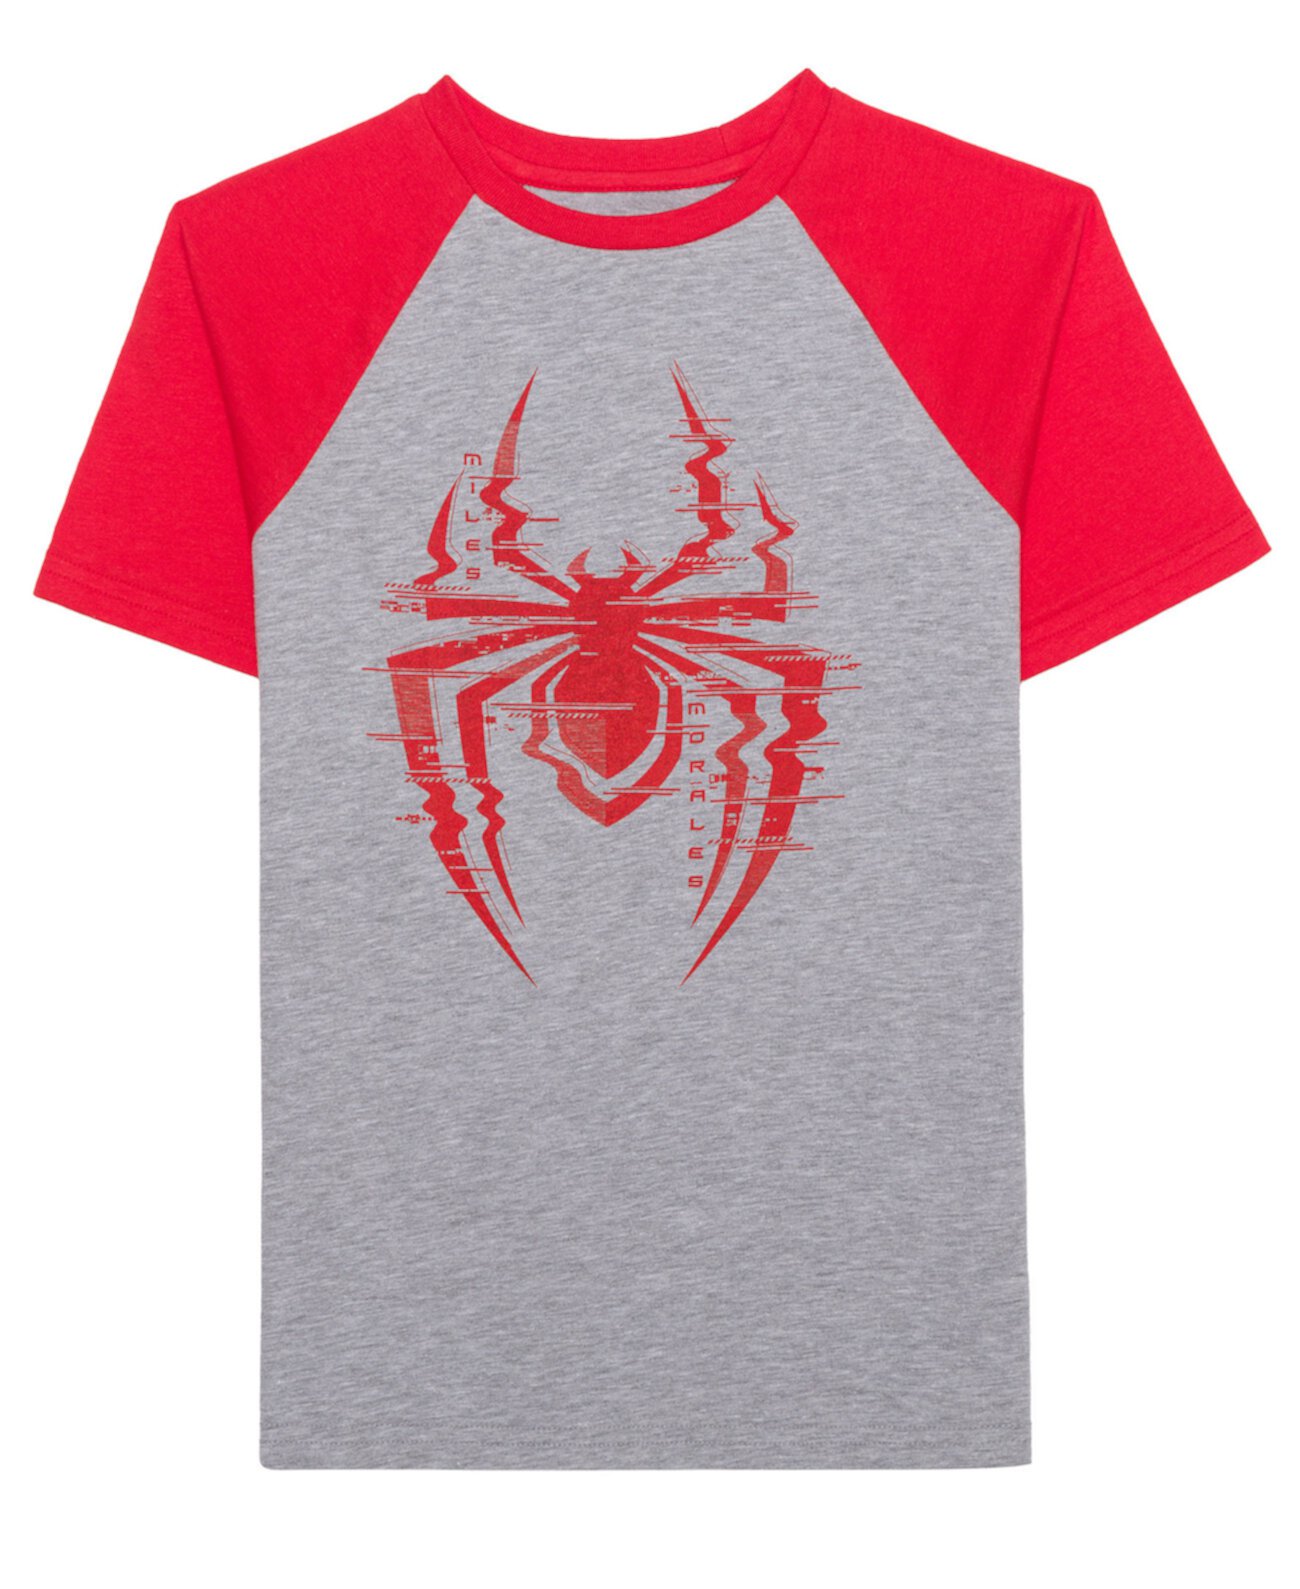 Spider Man Big Boys Graphic Print T-Shirt SPIDERMAN